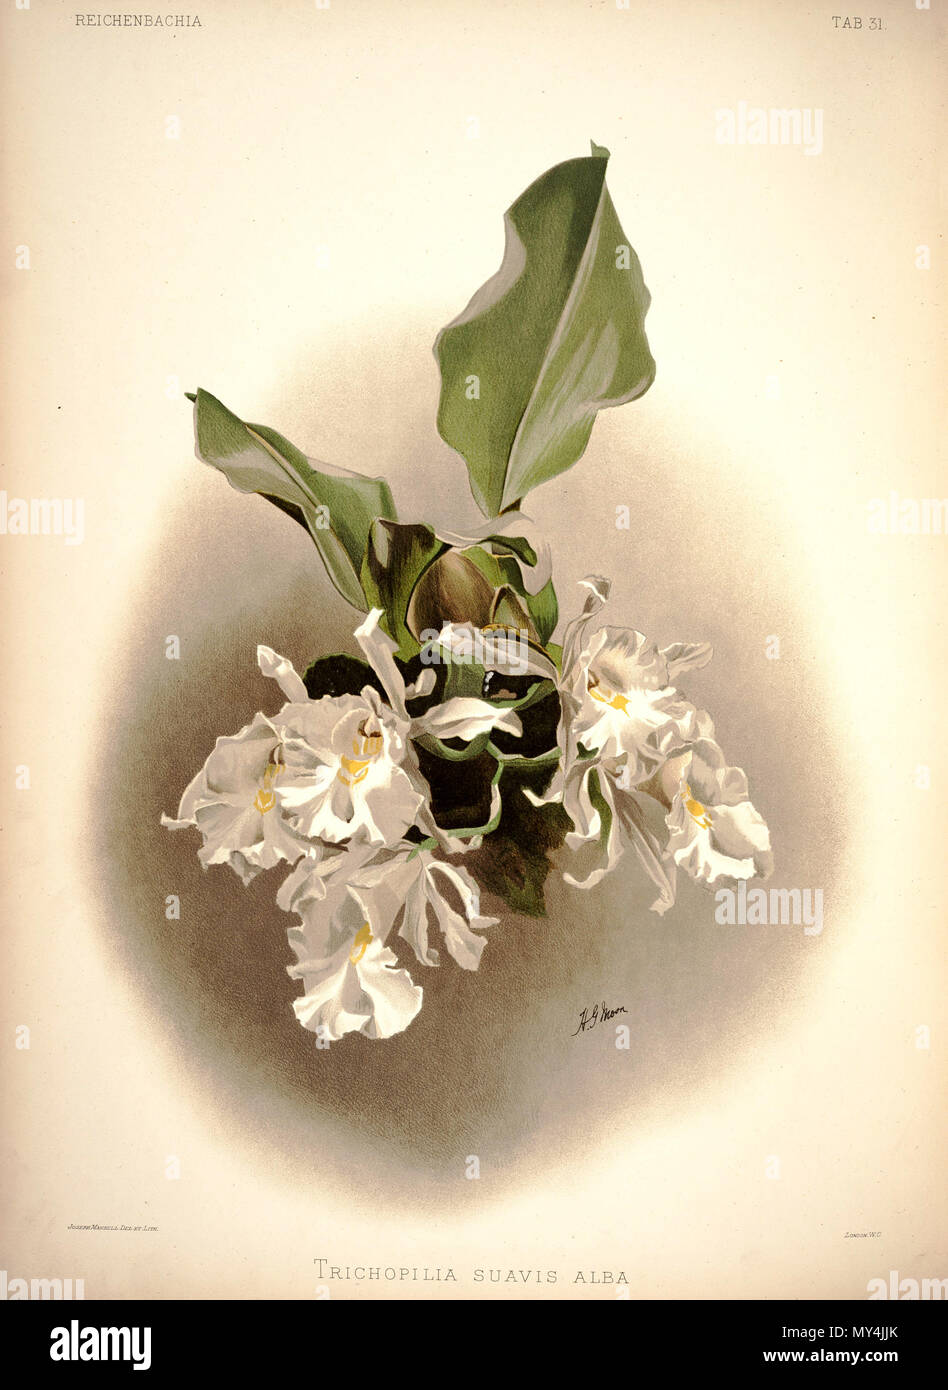 . Trichopilia suavis . between 1888 and 1894. H. Sotheran & Co., London (editor) 189 Frederick Sander - Reichenbachia I plate 31 (1888) - Trichopilia suavis alba Stock Photo